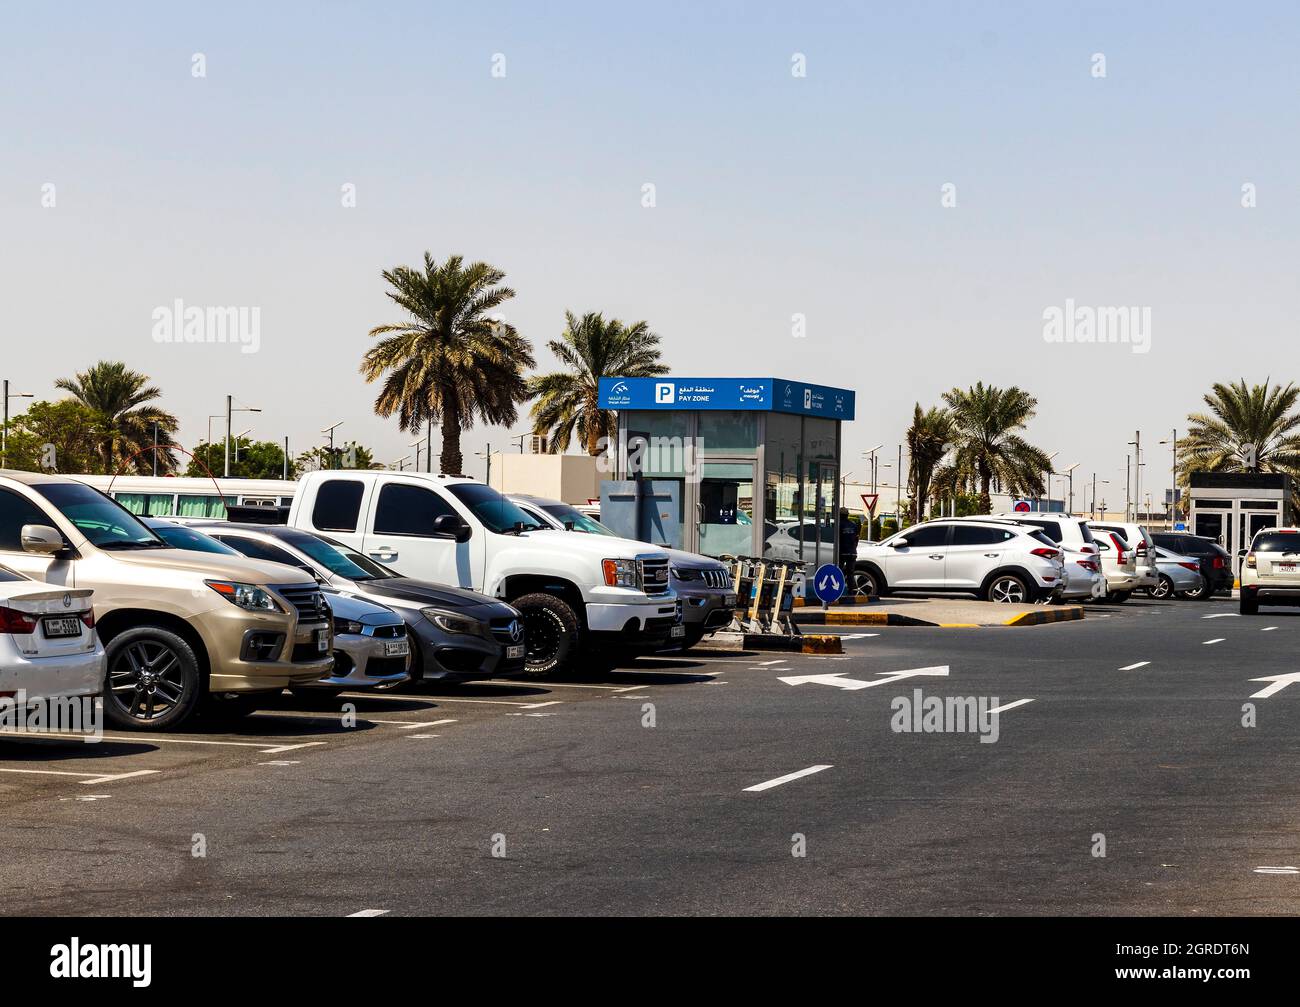 Dubai, UAE - 09.20.2021 Public parking of Sharjah International airport  Stock Photo - Alamy